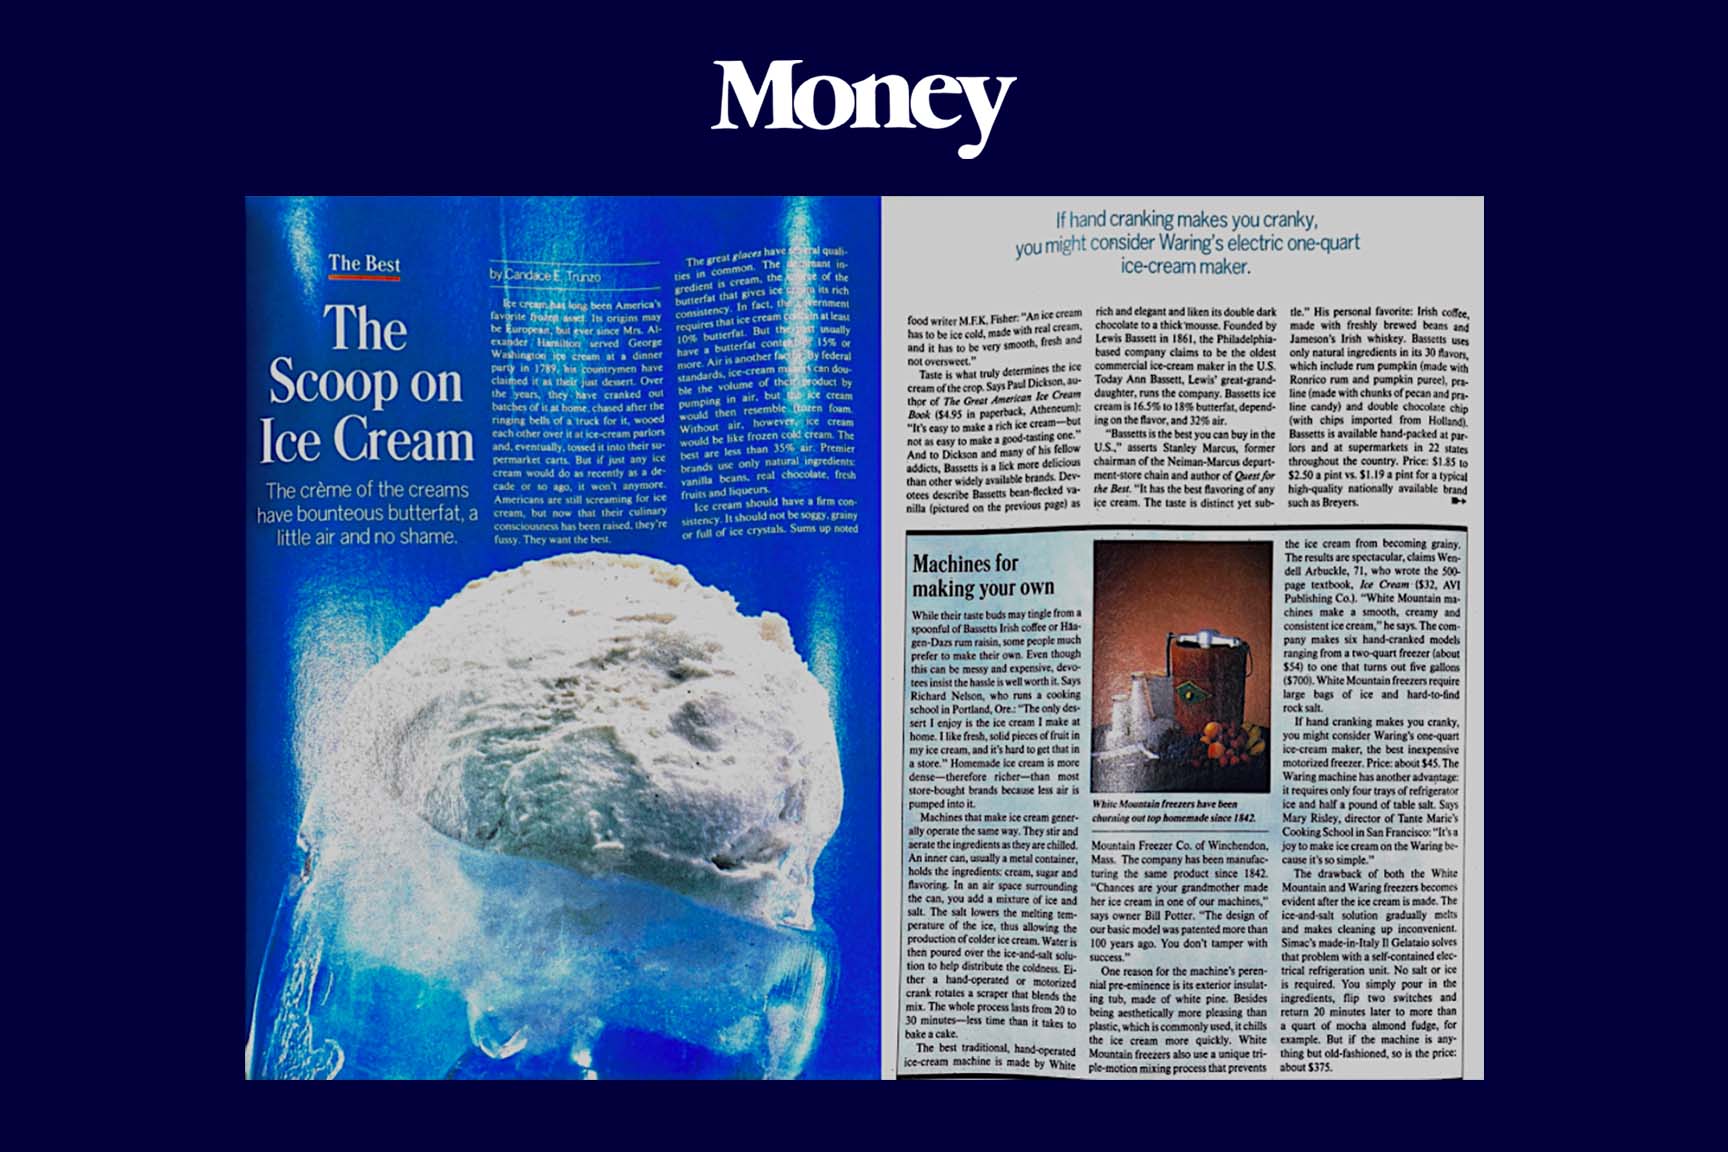 Money Classic: Inside America's Favorite Frozen Asset (1982) | Money